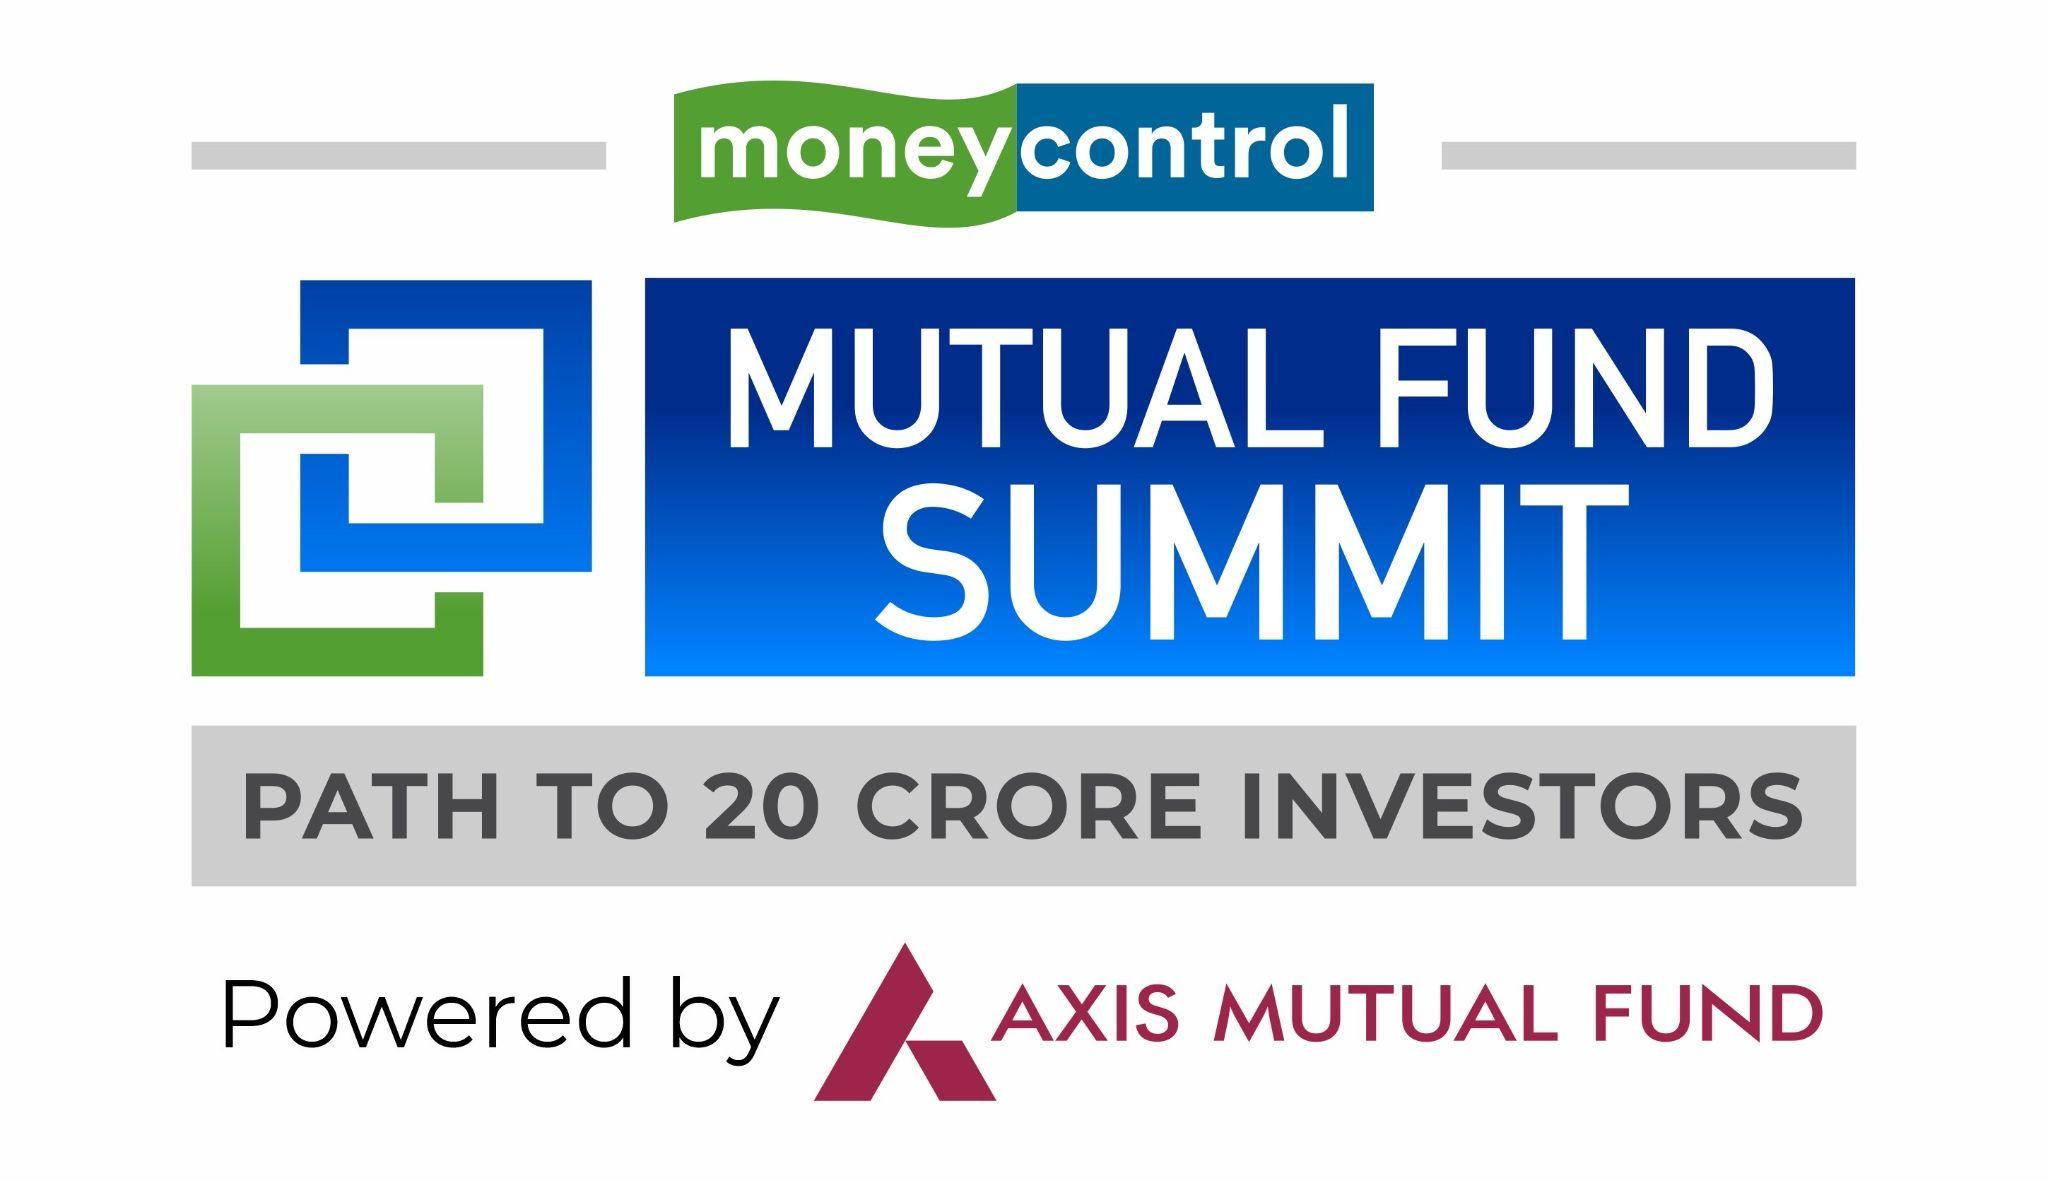 Moneycontrol Mutual Fund Summit 2.0 – Path to 20 crore investors